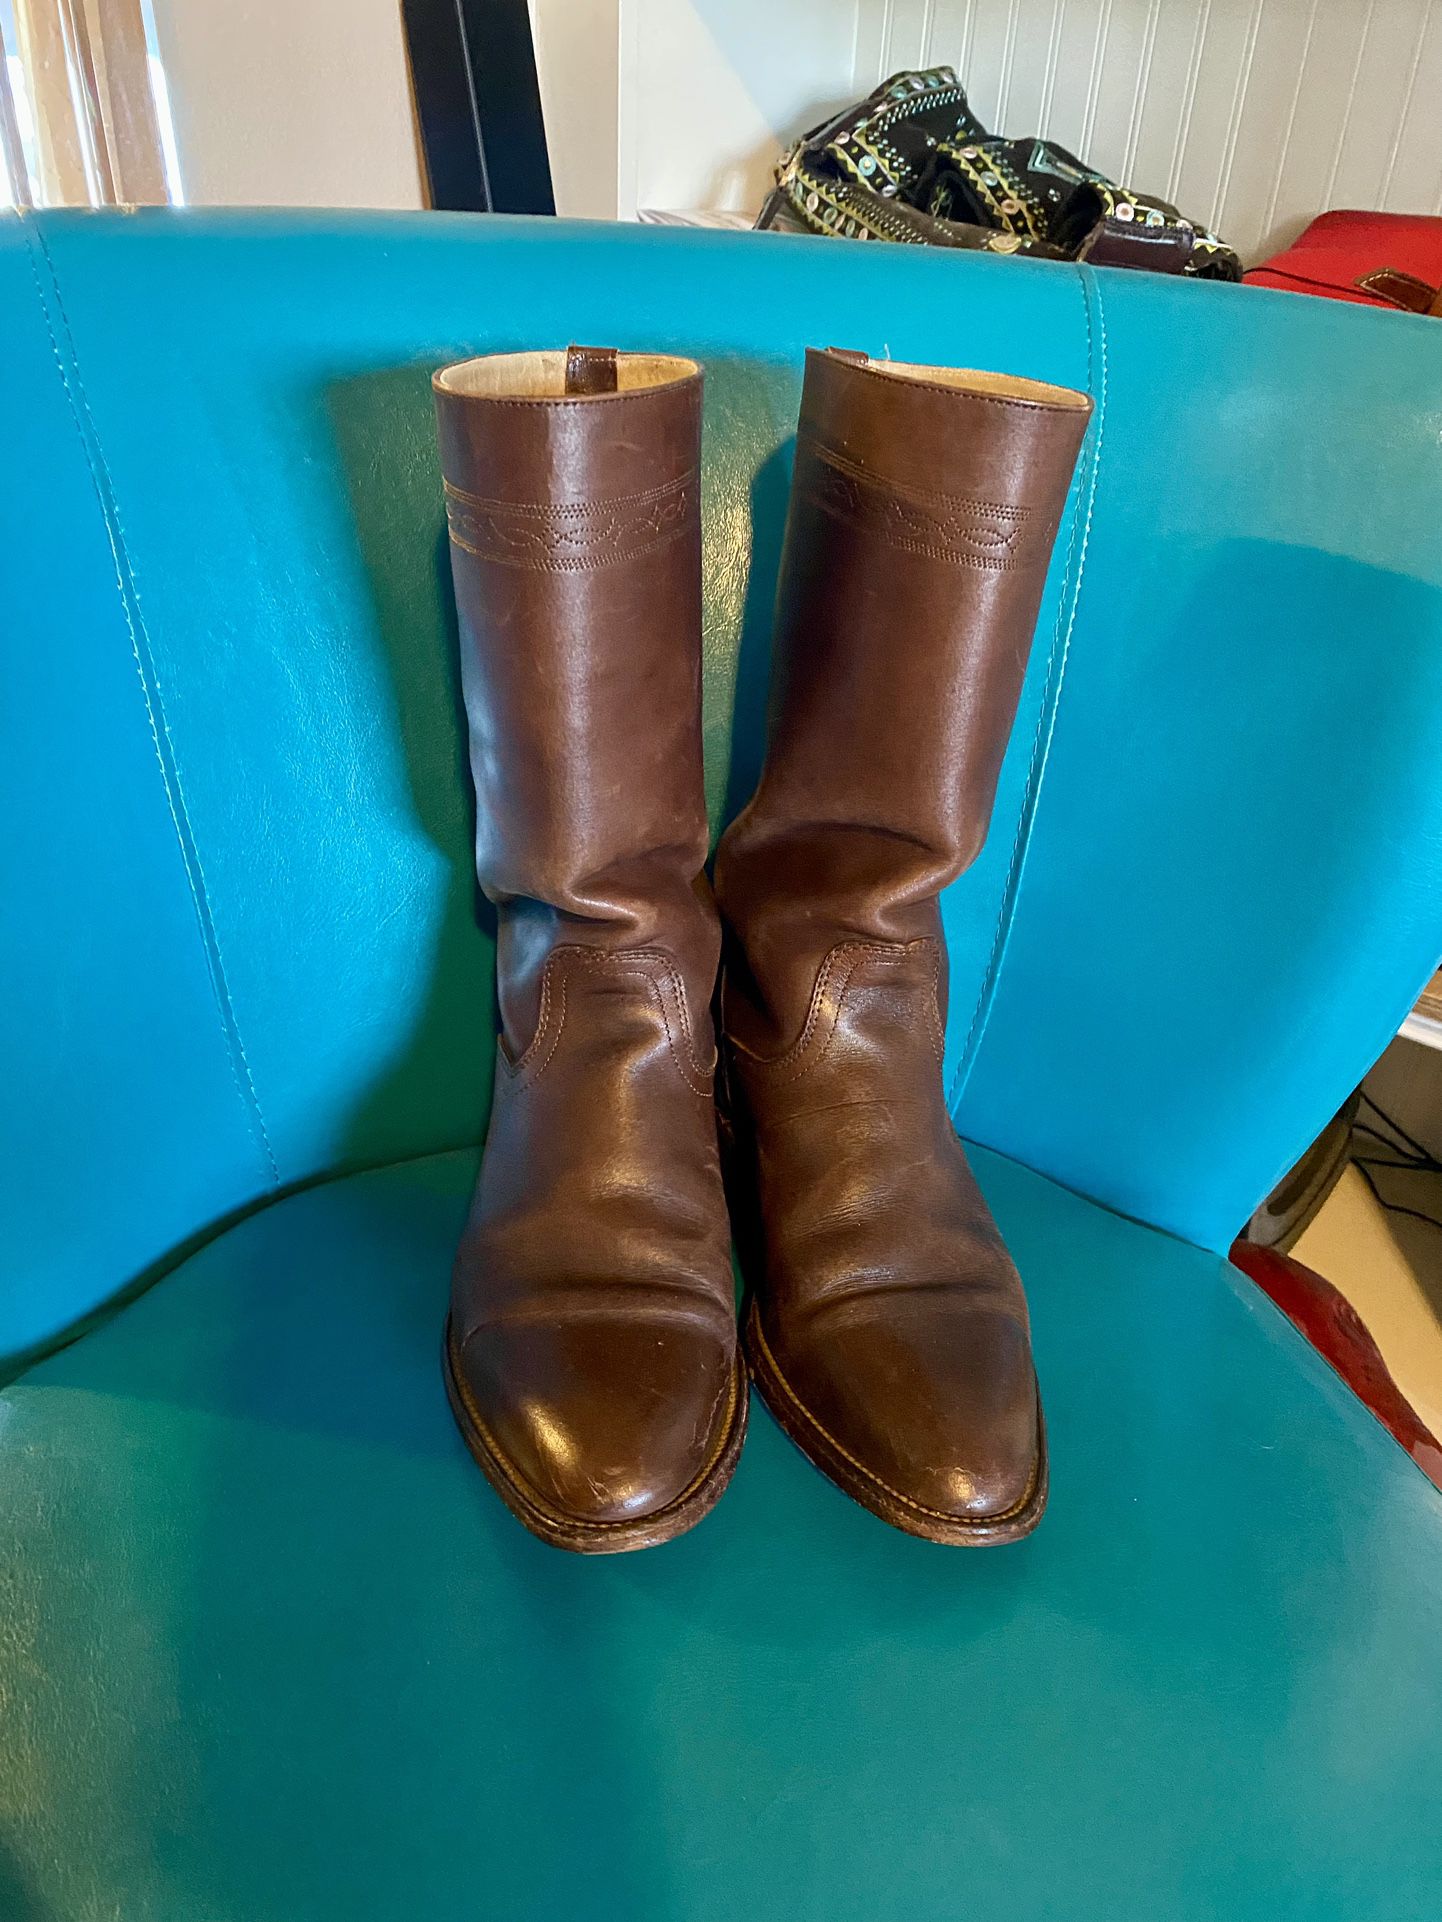 Vintage Frye Boots Men’s Size 8.5